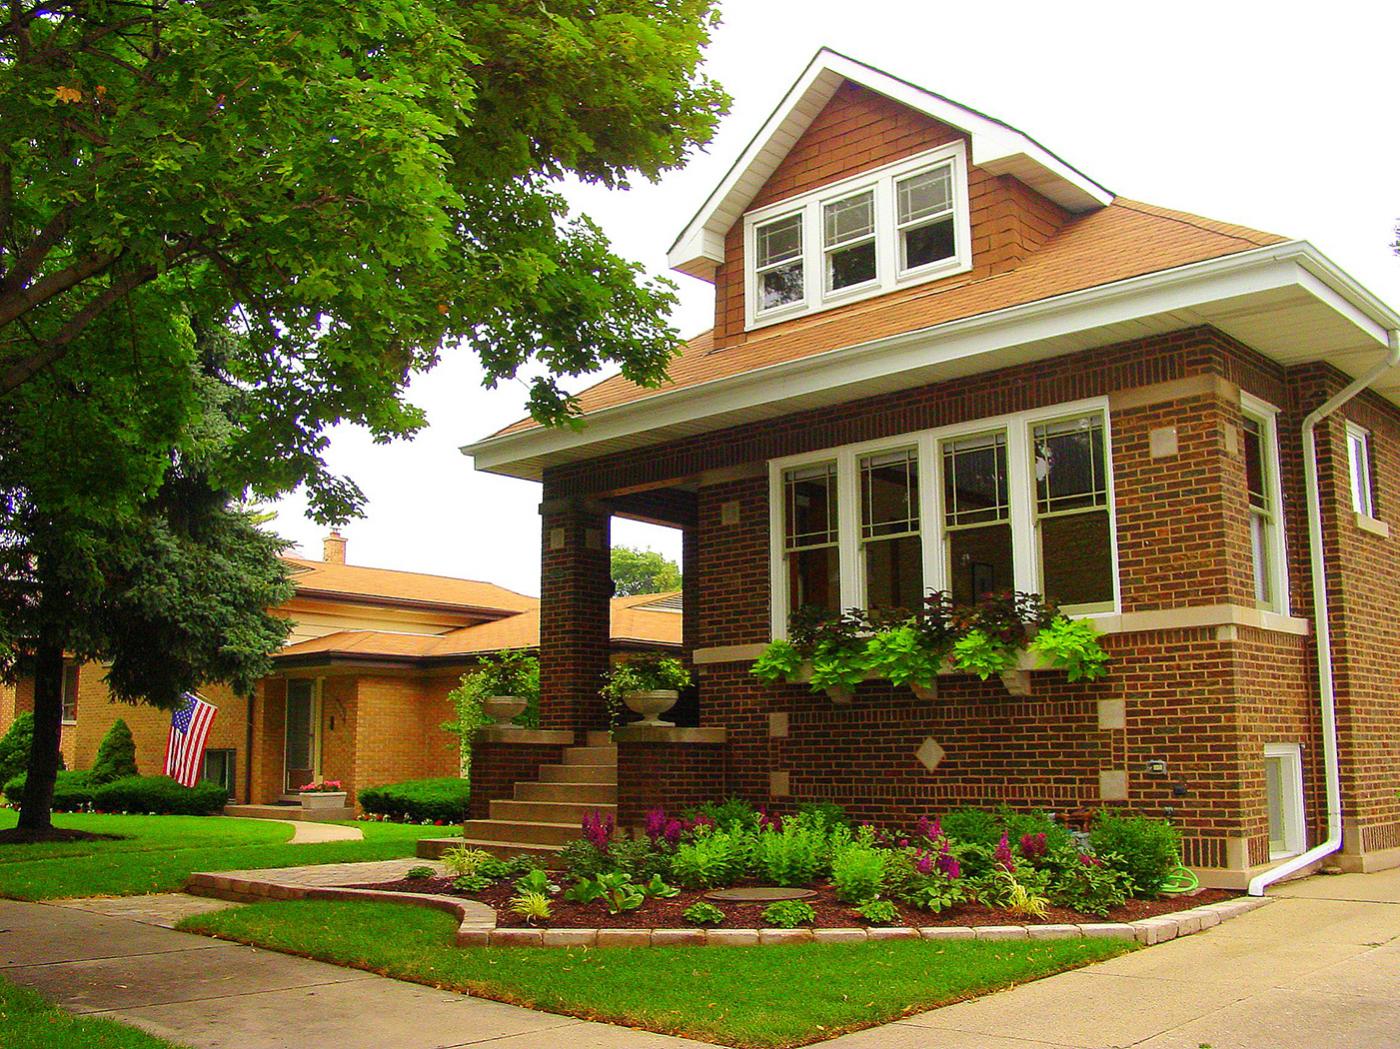 A Chicago bungalow in Skokie, Illinois